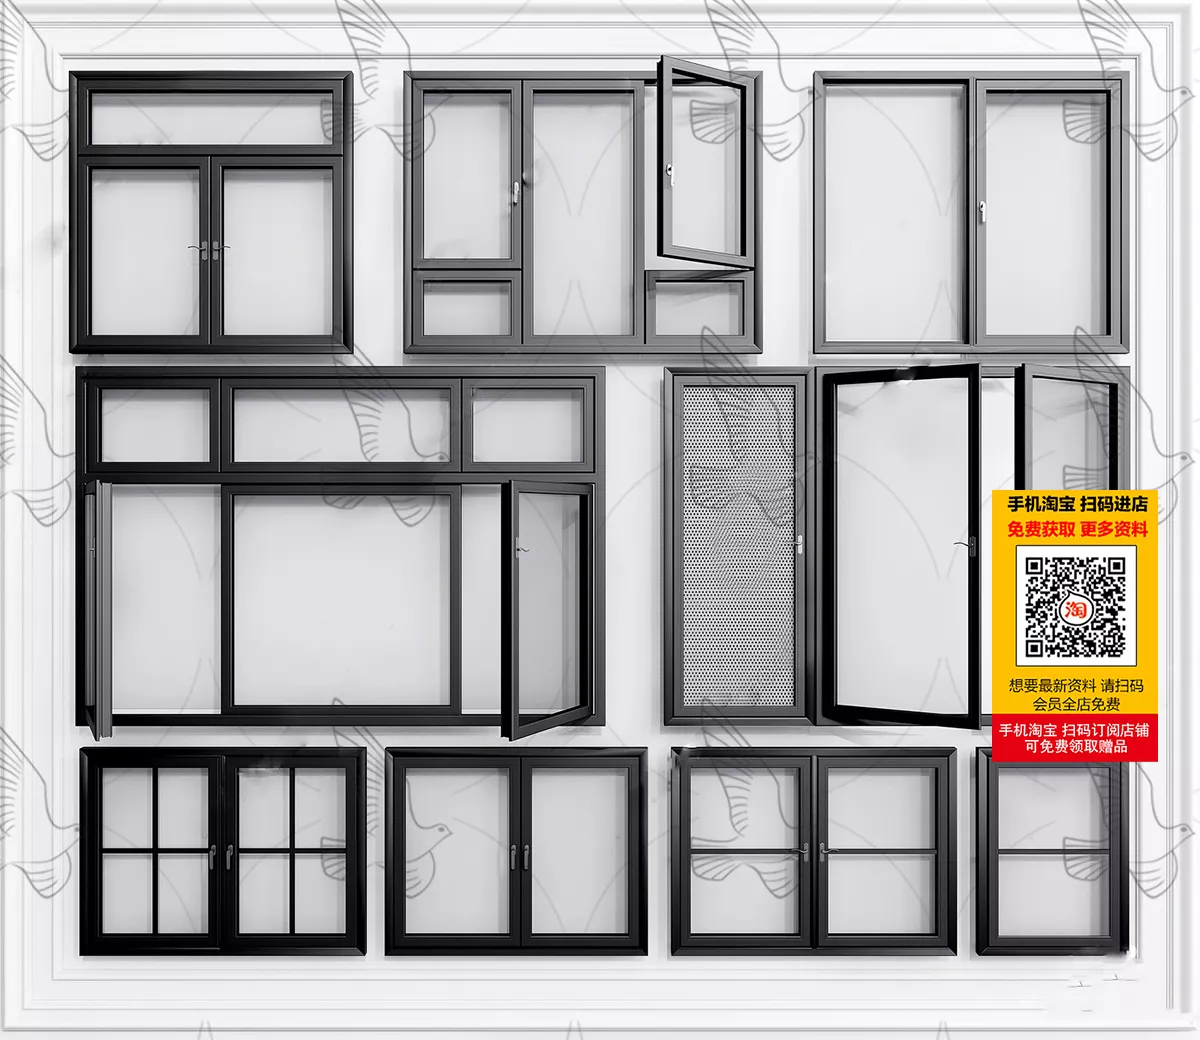 MODERN WINDOWS - SKETCHUP 3D MODEL - VRAY OR ENSCAPE - ID16706